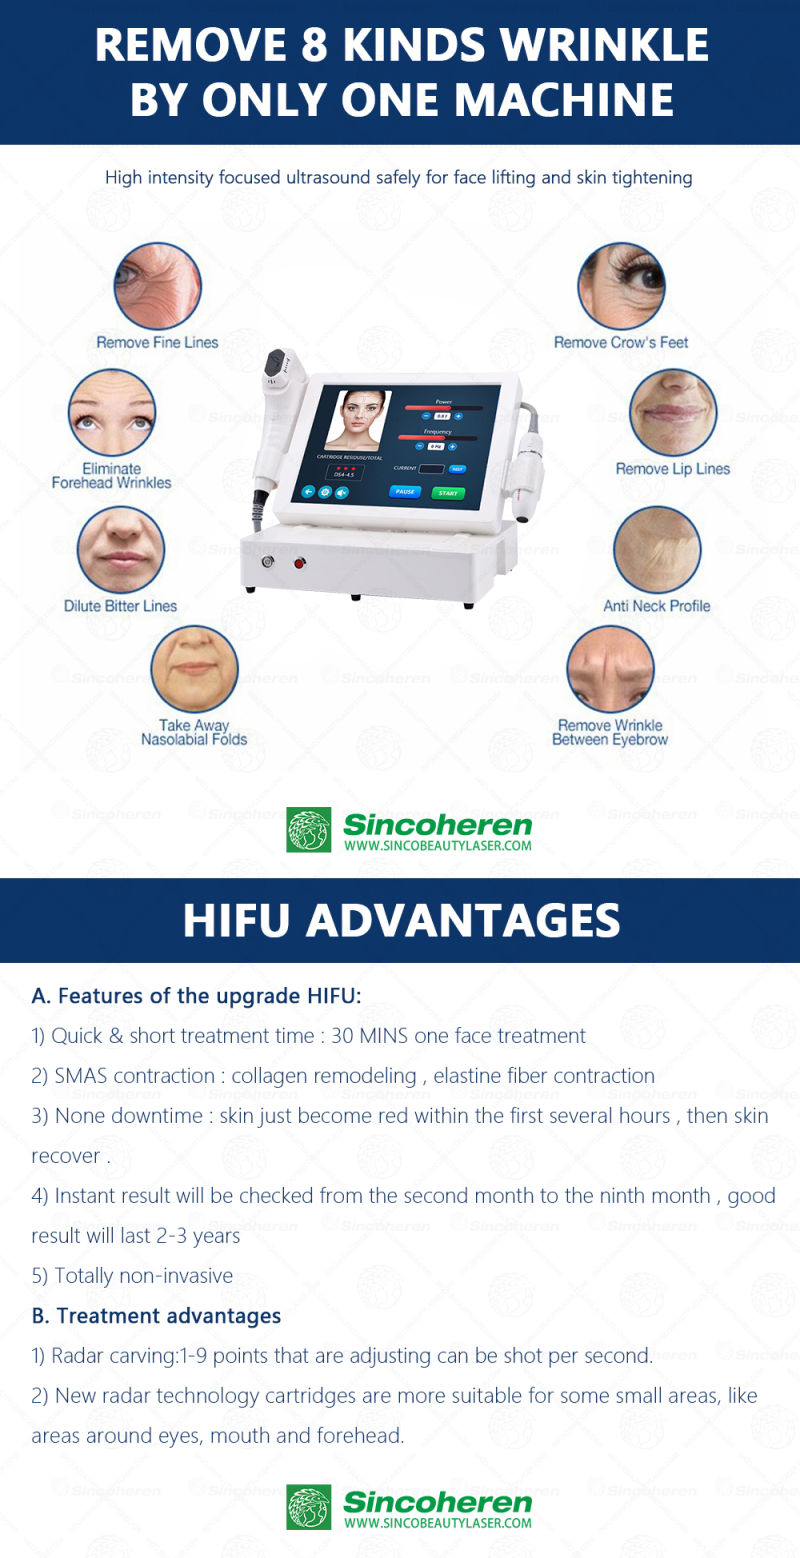 Professional Portable Hifu 4D Hifu Face Lift Machine